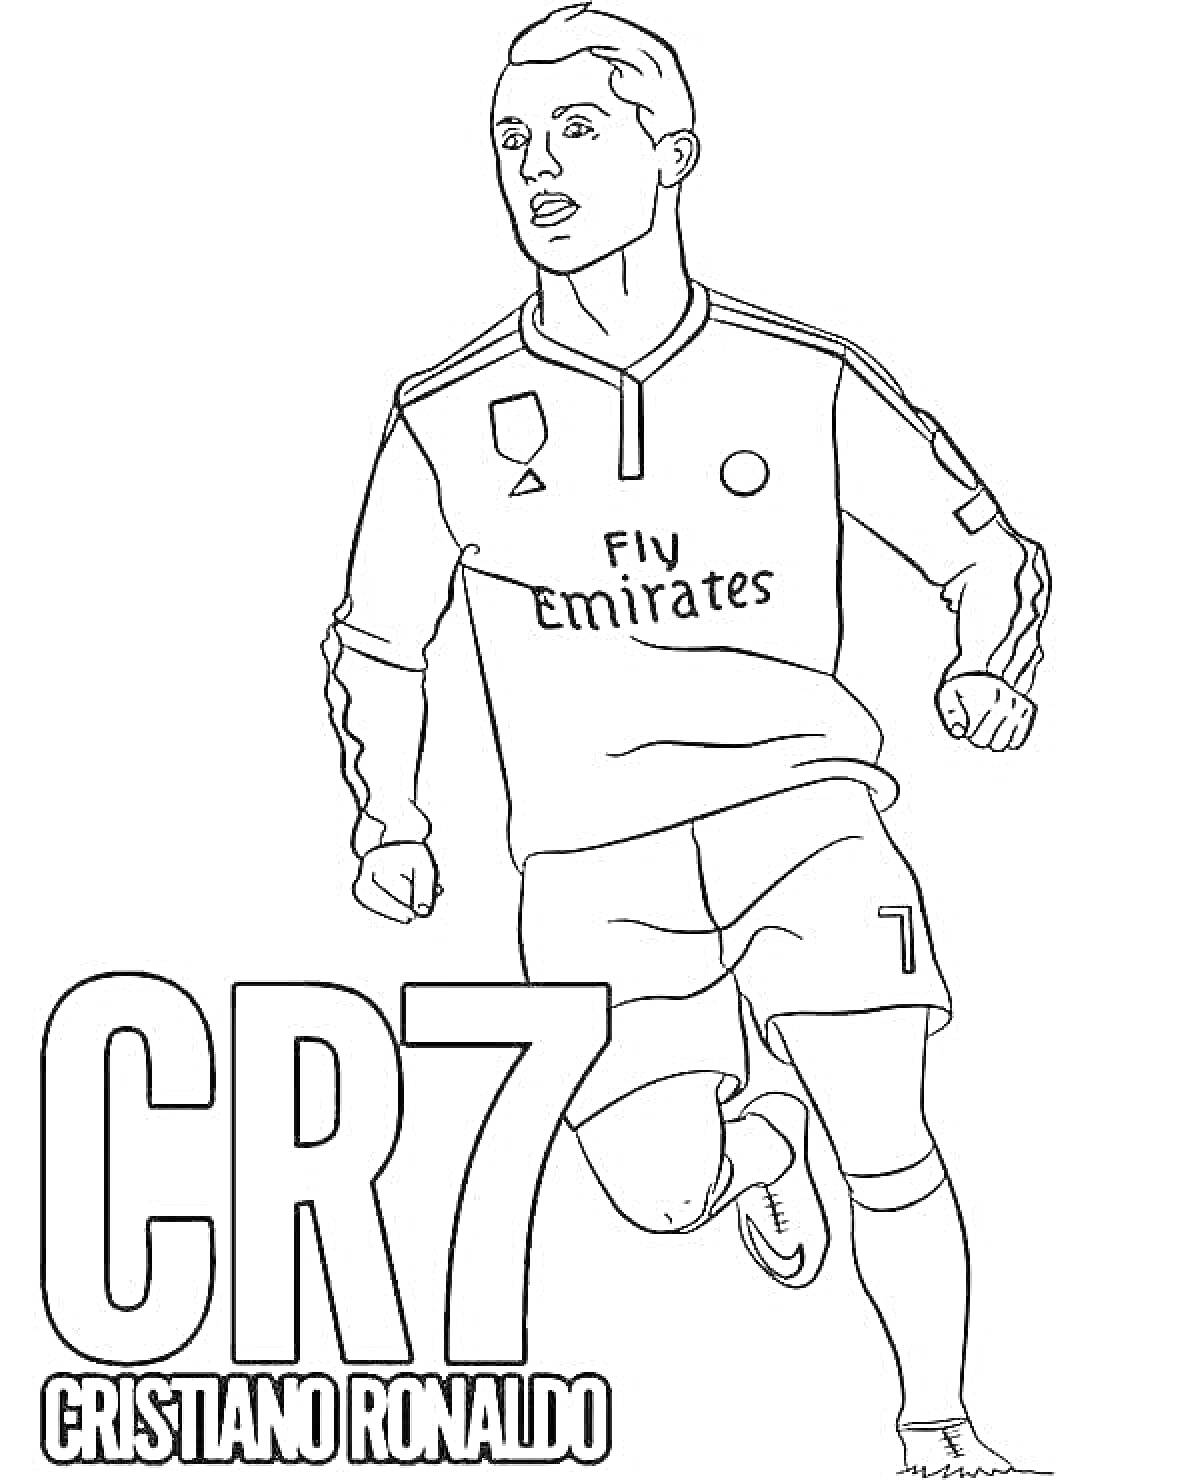 Футболист в форме с надписями CR7 и Cristiano Ronaldo